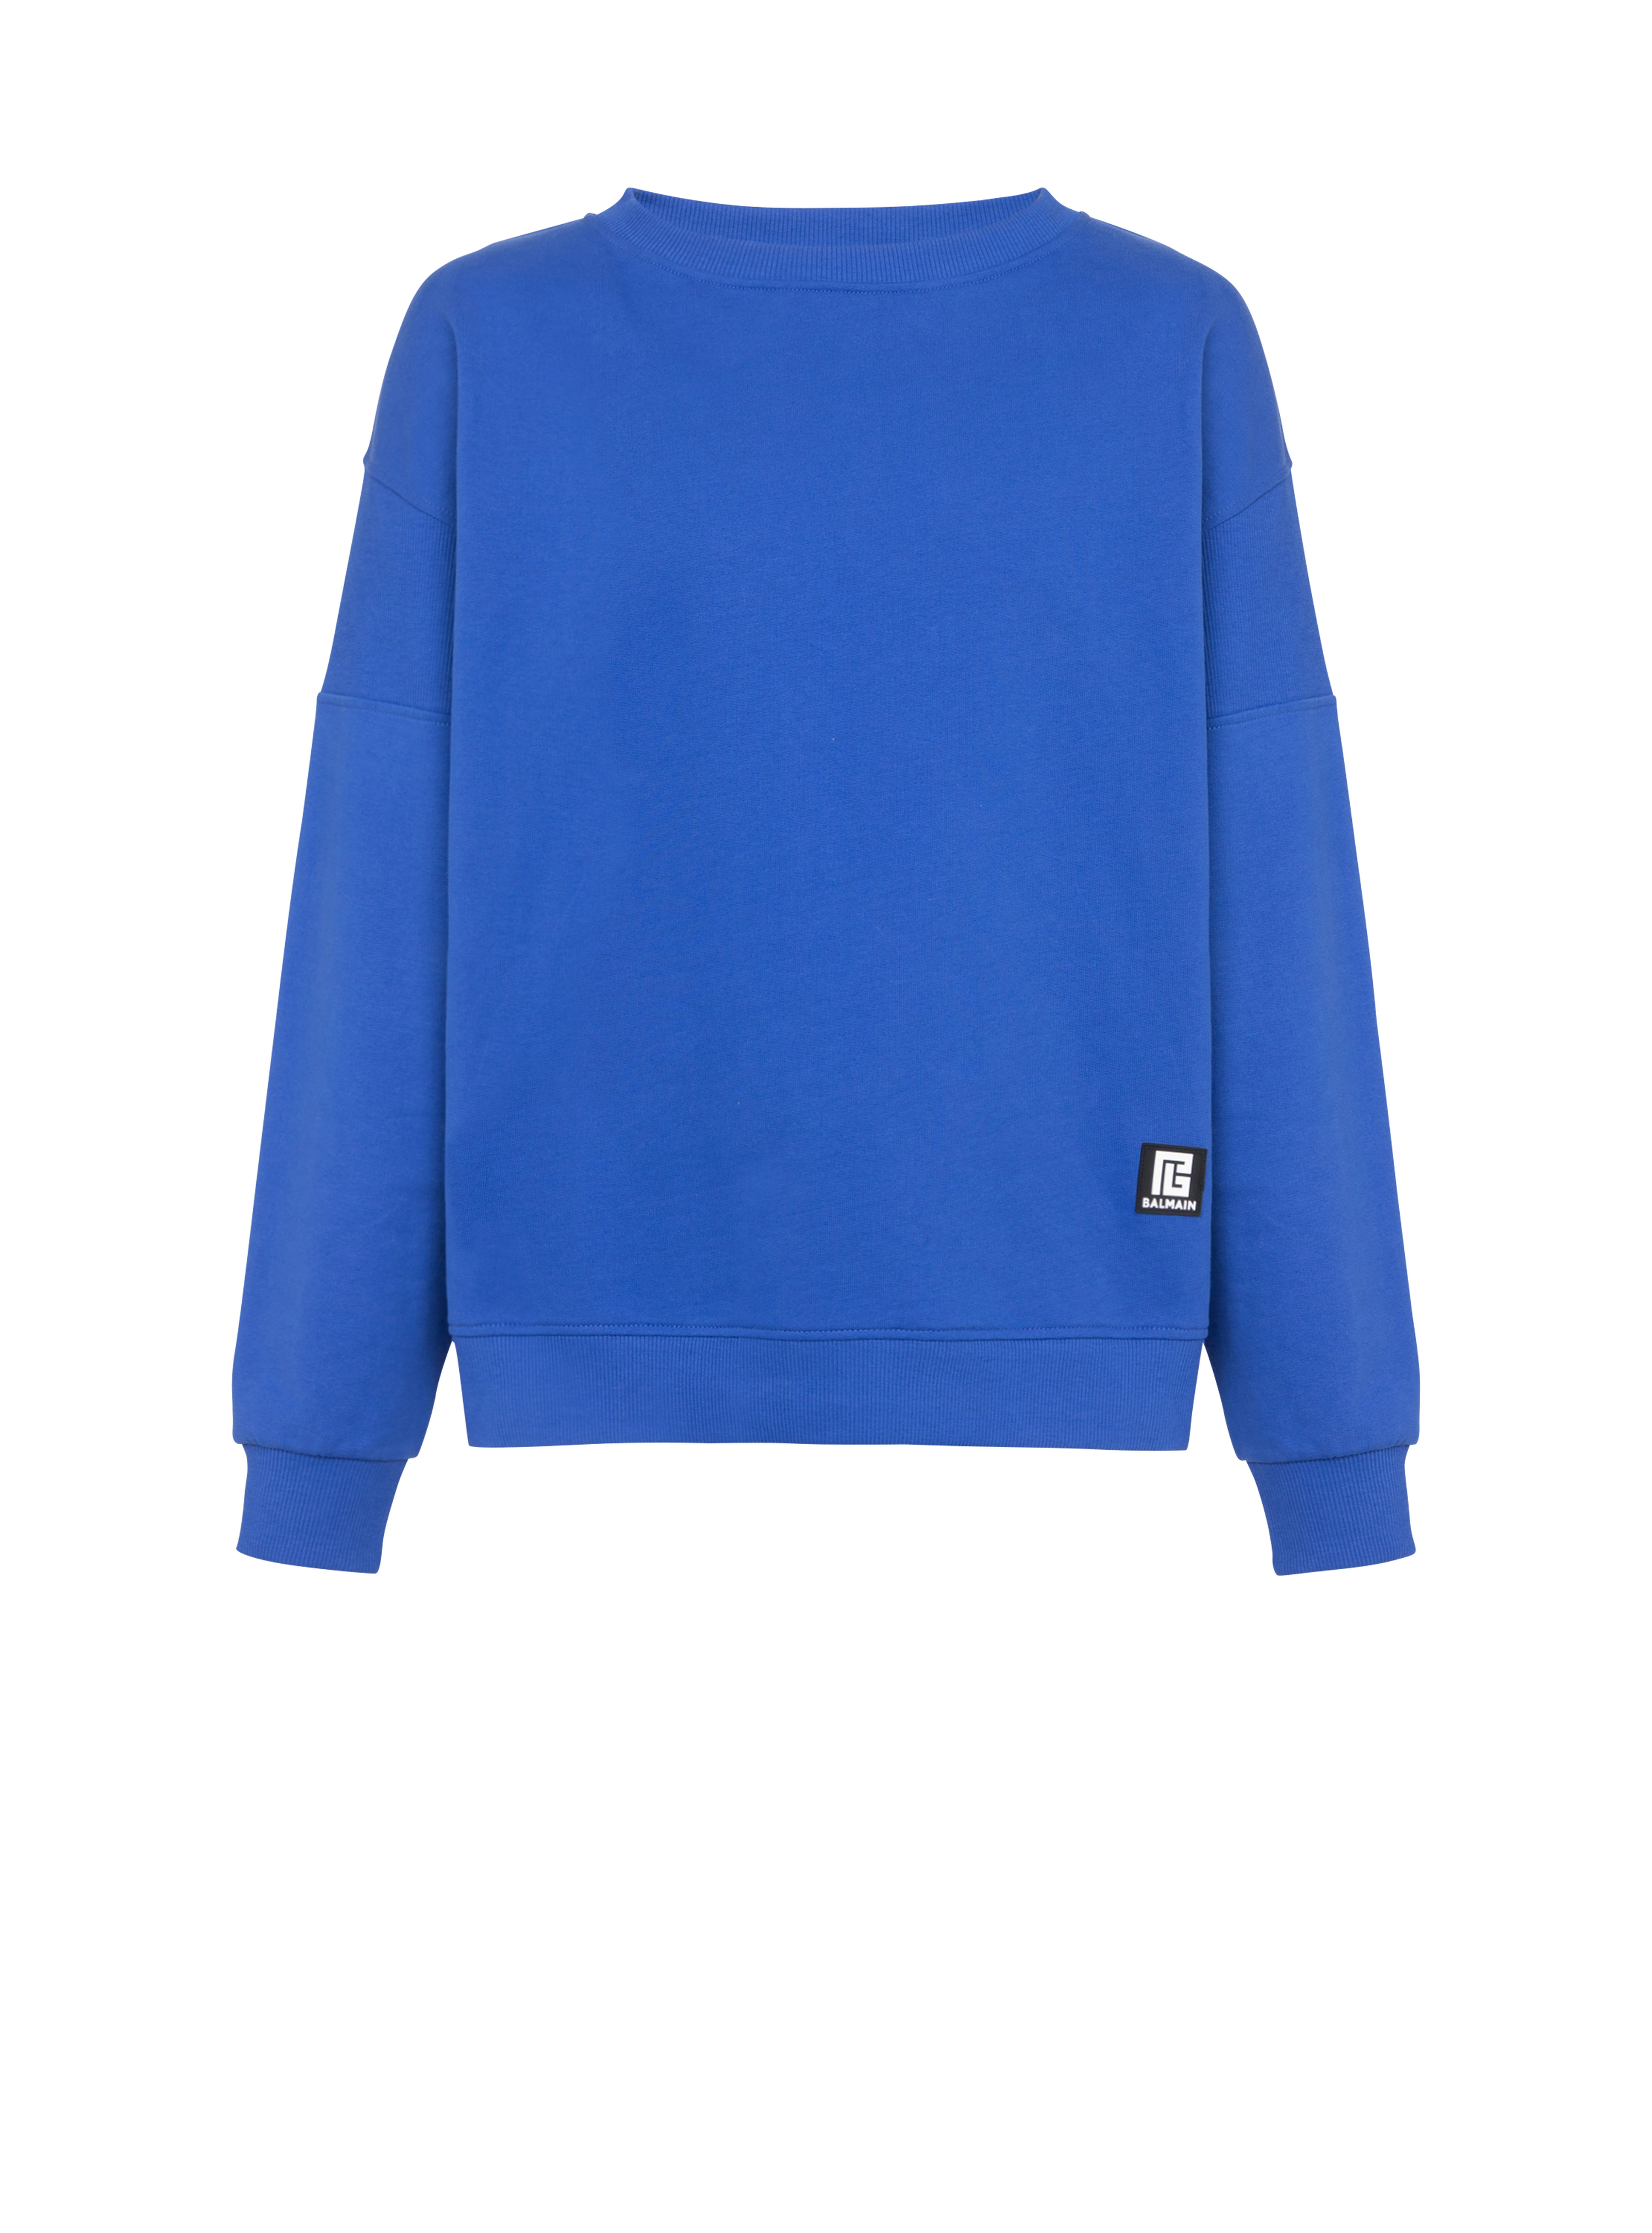 Eco-designed cotton sweatshirt with Balmain logo print, navy